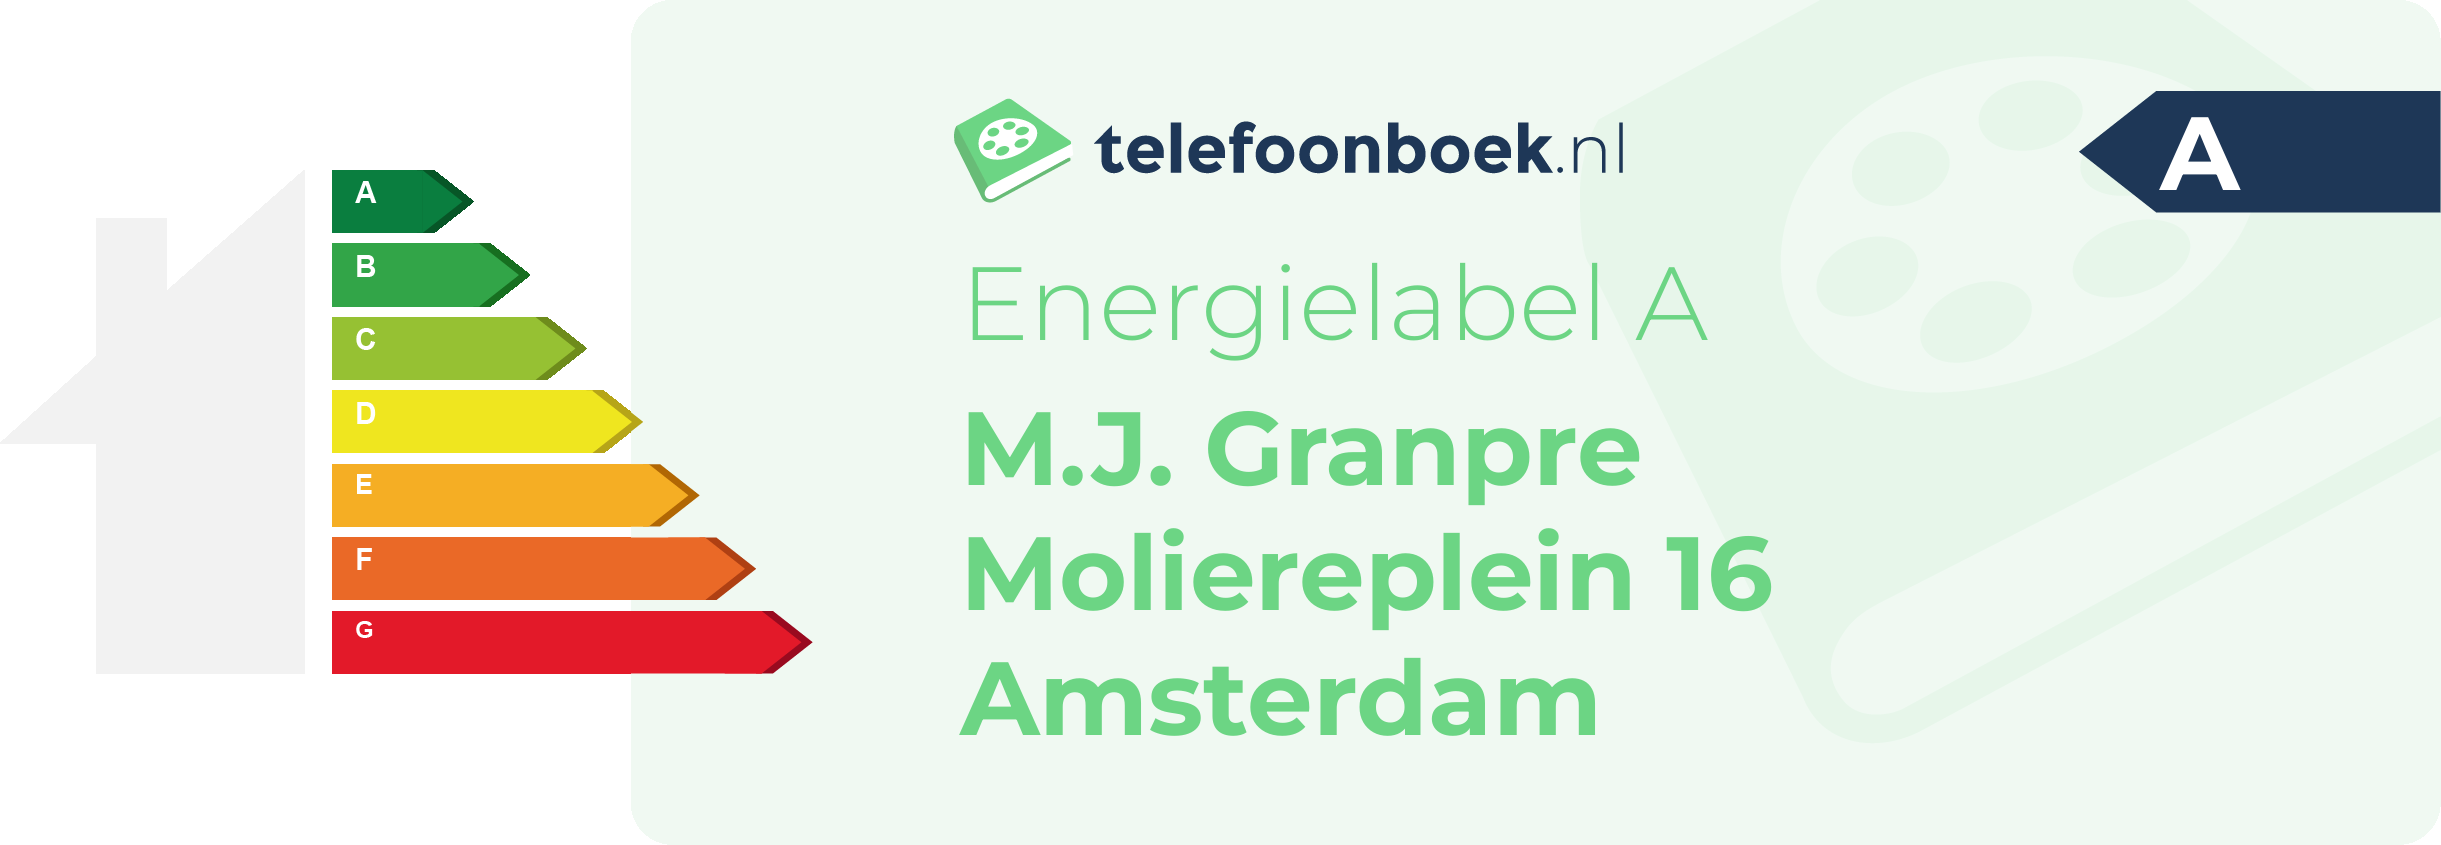 Energielabel M.J. Granpre Moliereplein 16 Amsterdam